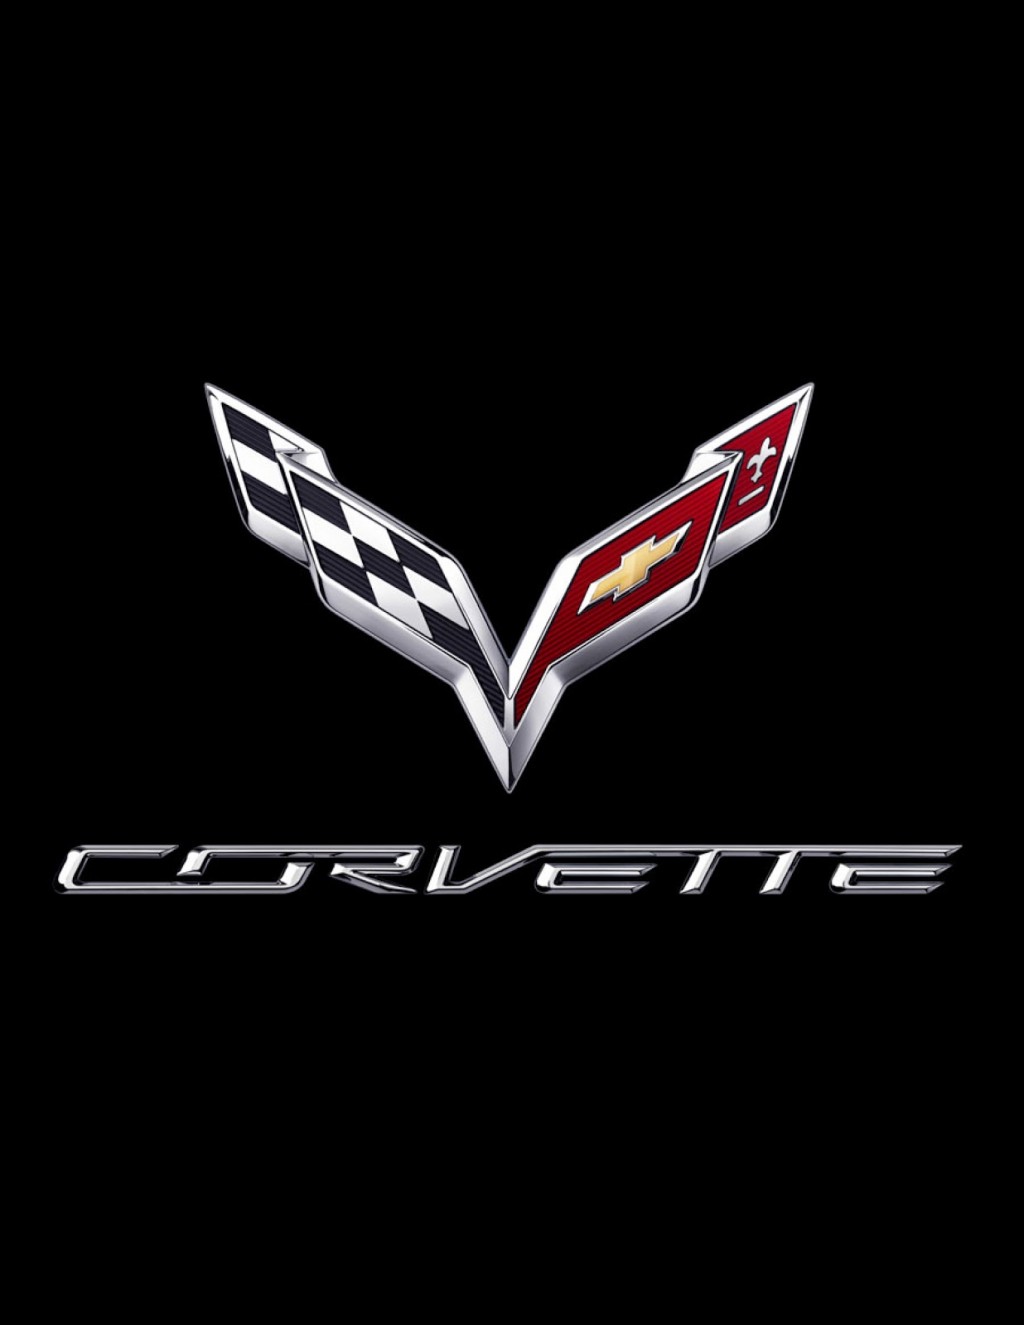 2014 Corvette Engine, October Car Sales, Six-Month Passat Test: Car News Headlines lead image